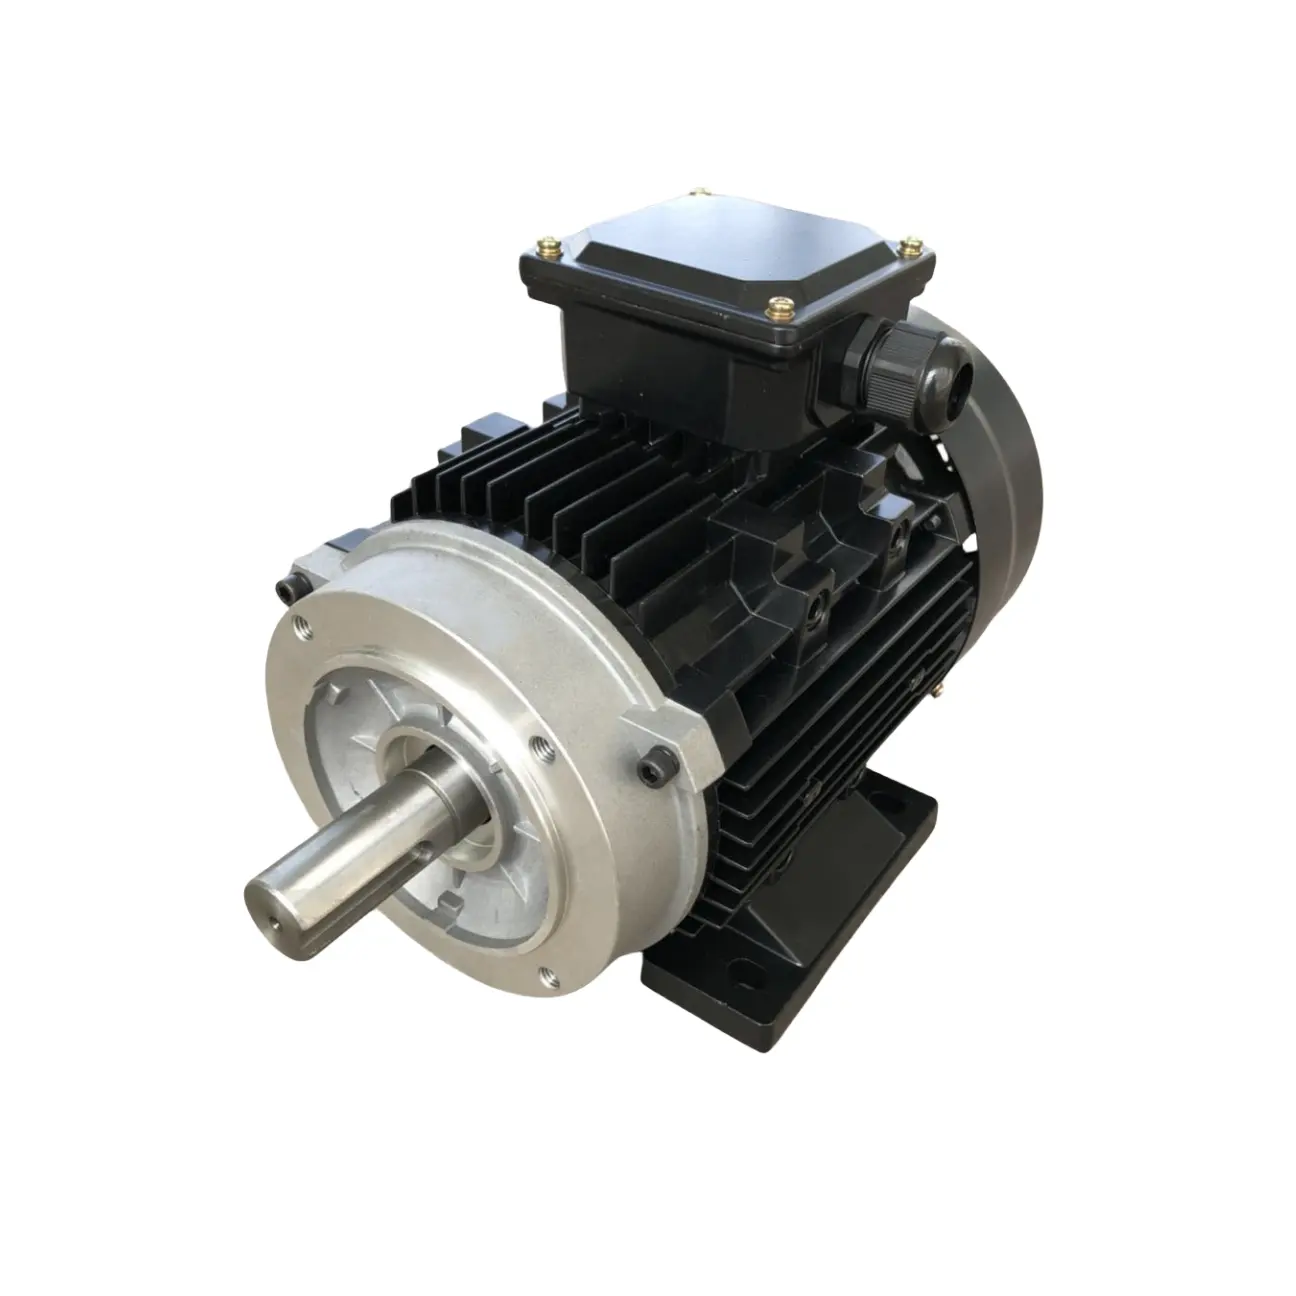 Brushless DC Motor BLDC Motor 48V 0.75KW 1500RPM for Intelligent warehousing and logistics